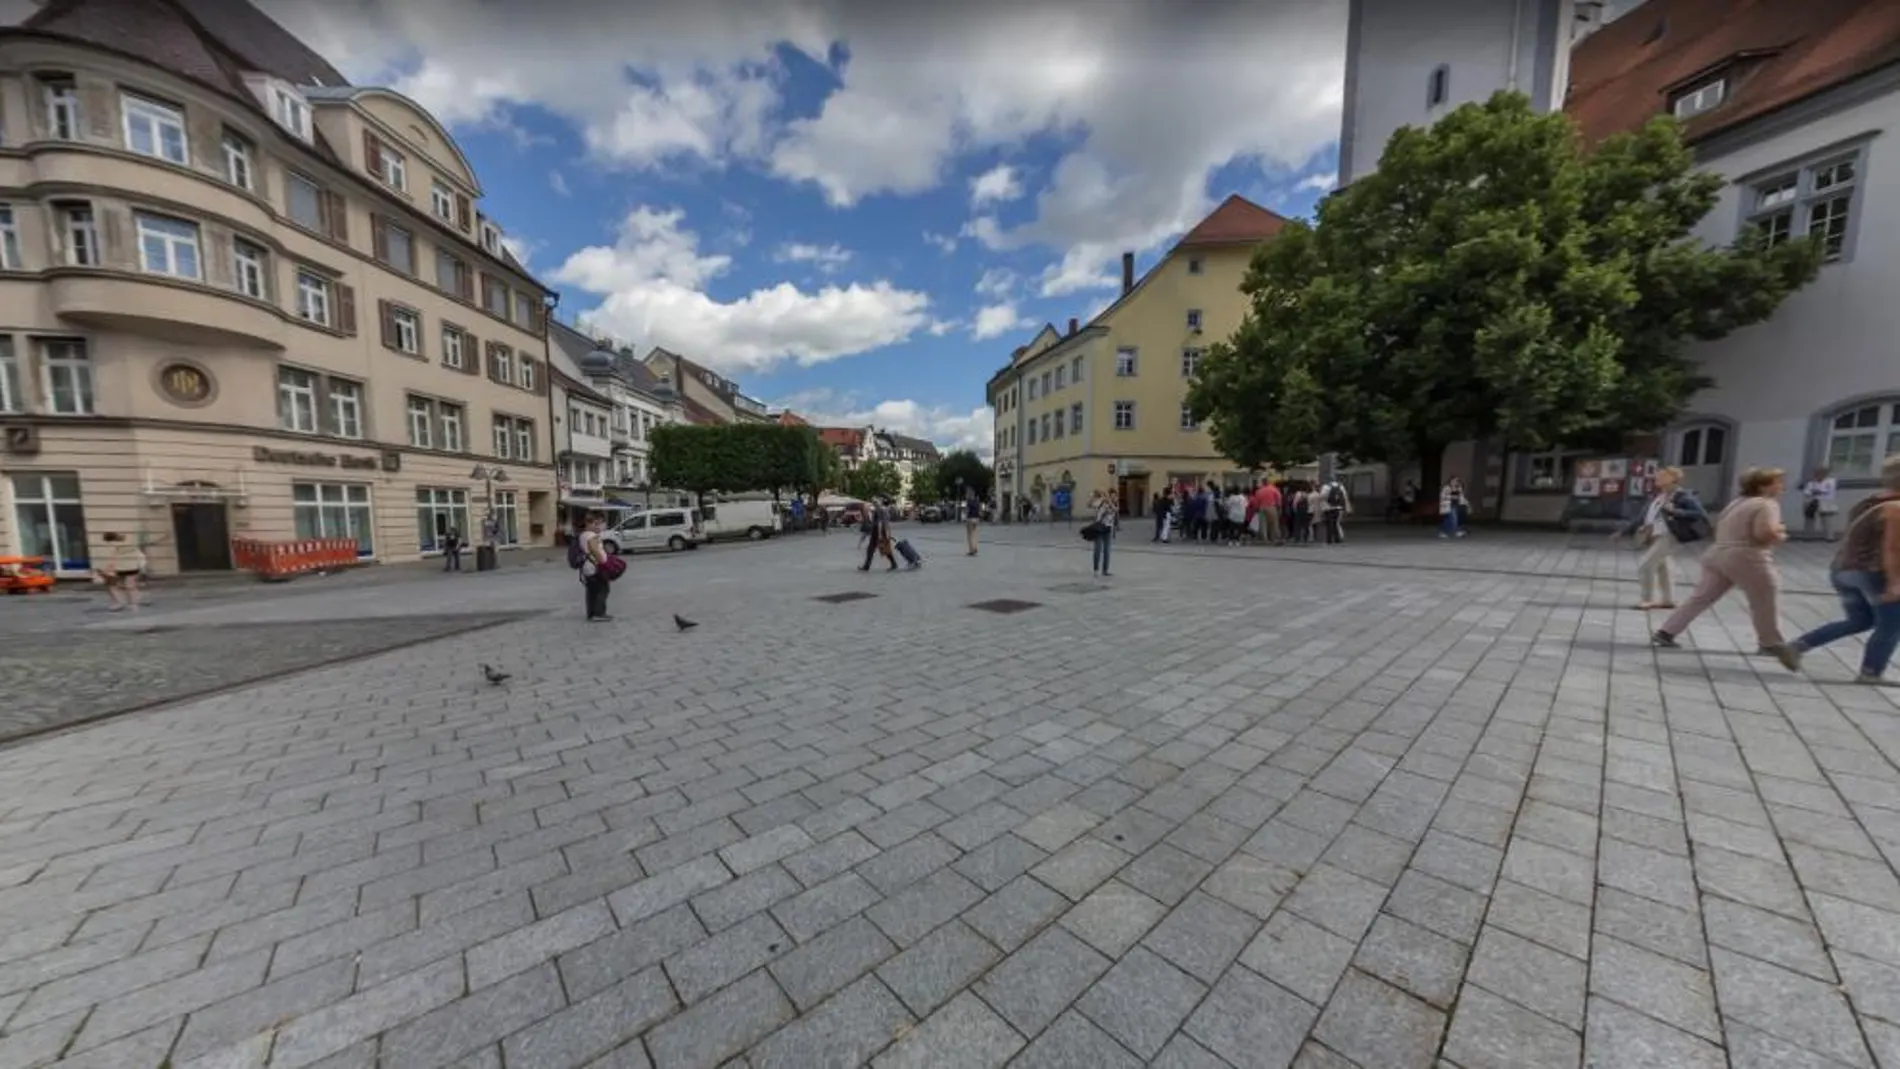 Imagen de la Marienplatz de Ravensburg. (Foto Google)